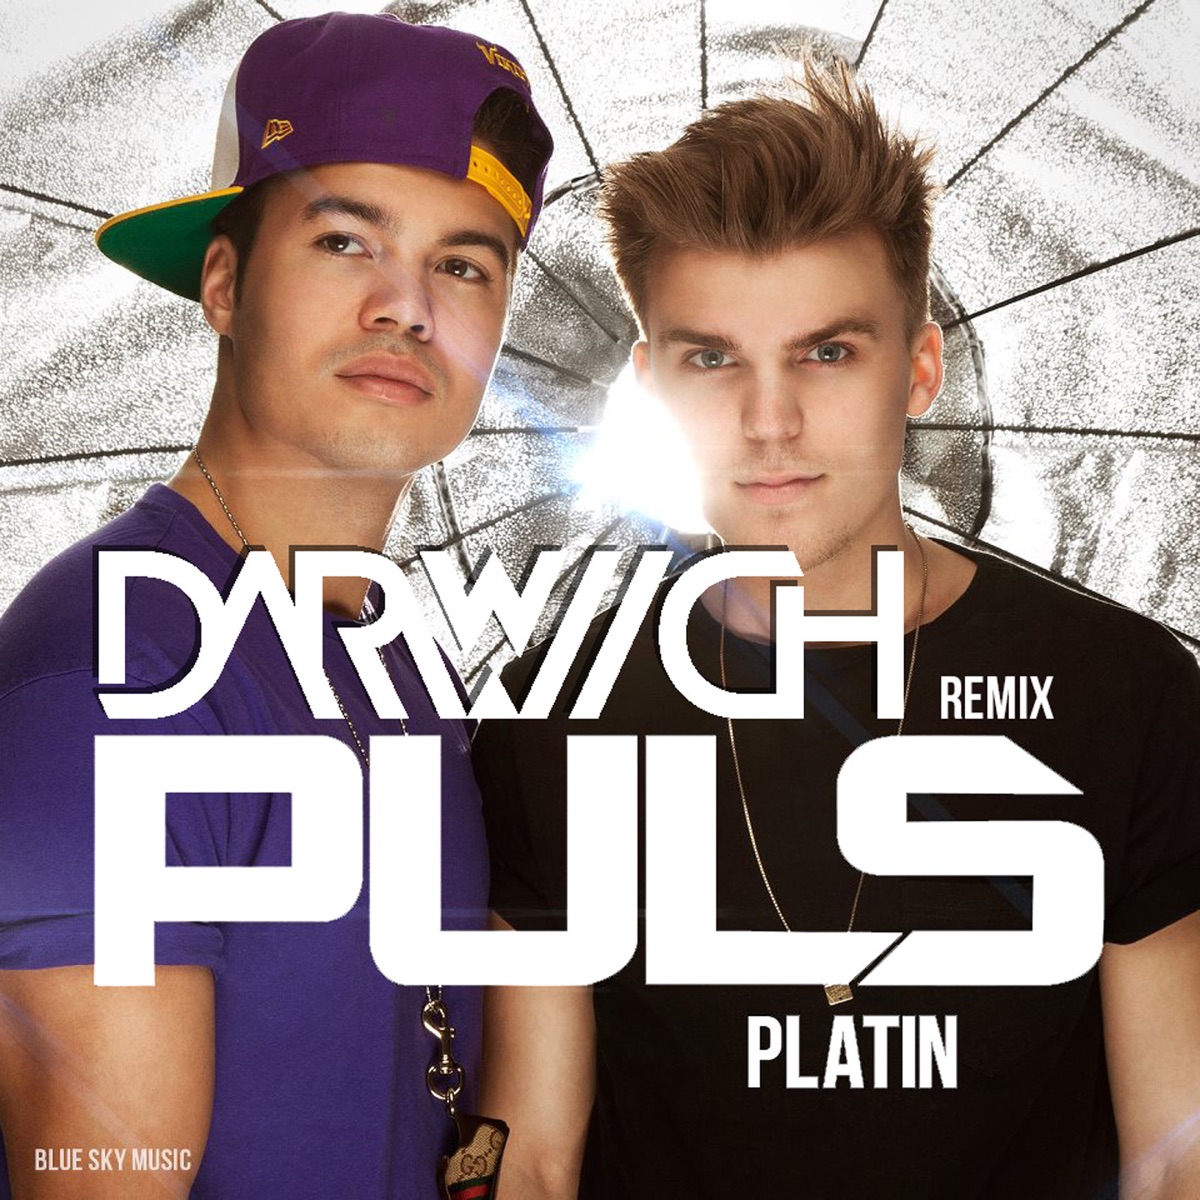 Tilskud Rettidig vinter Platin (Darwich Remix) - Single - Album by Puls - Apple Music